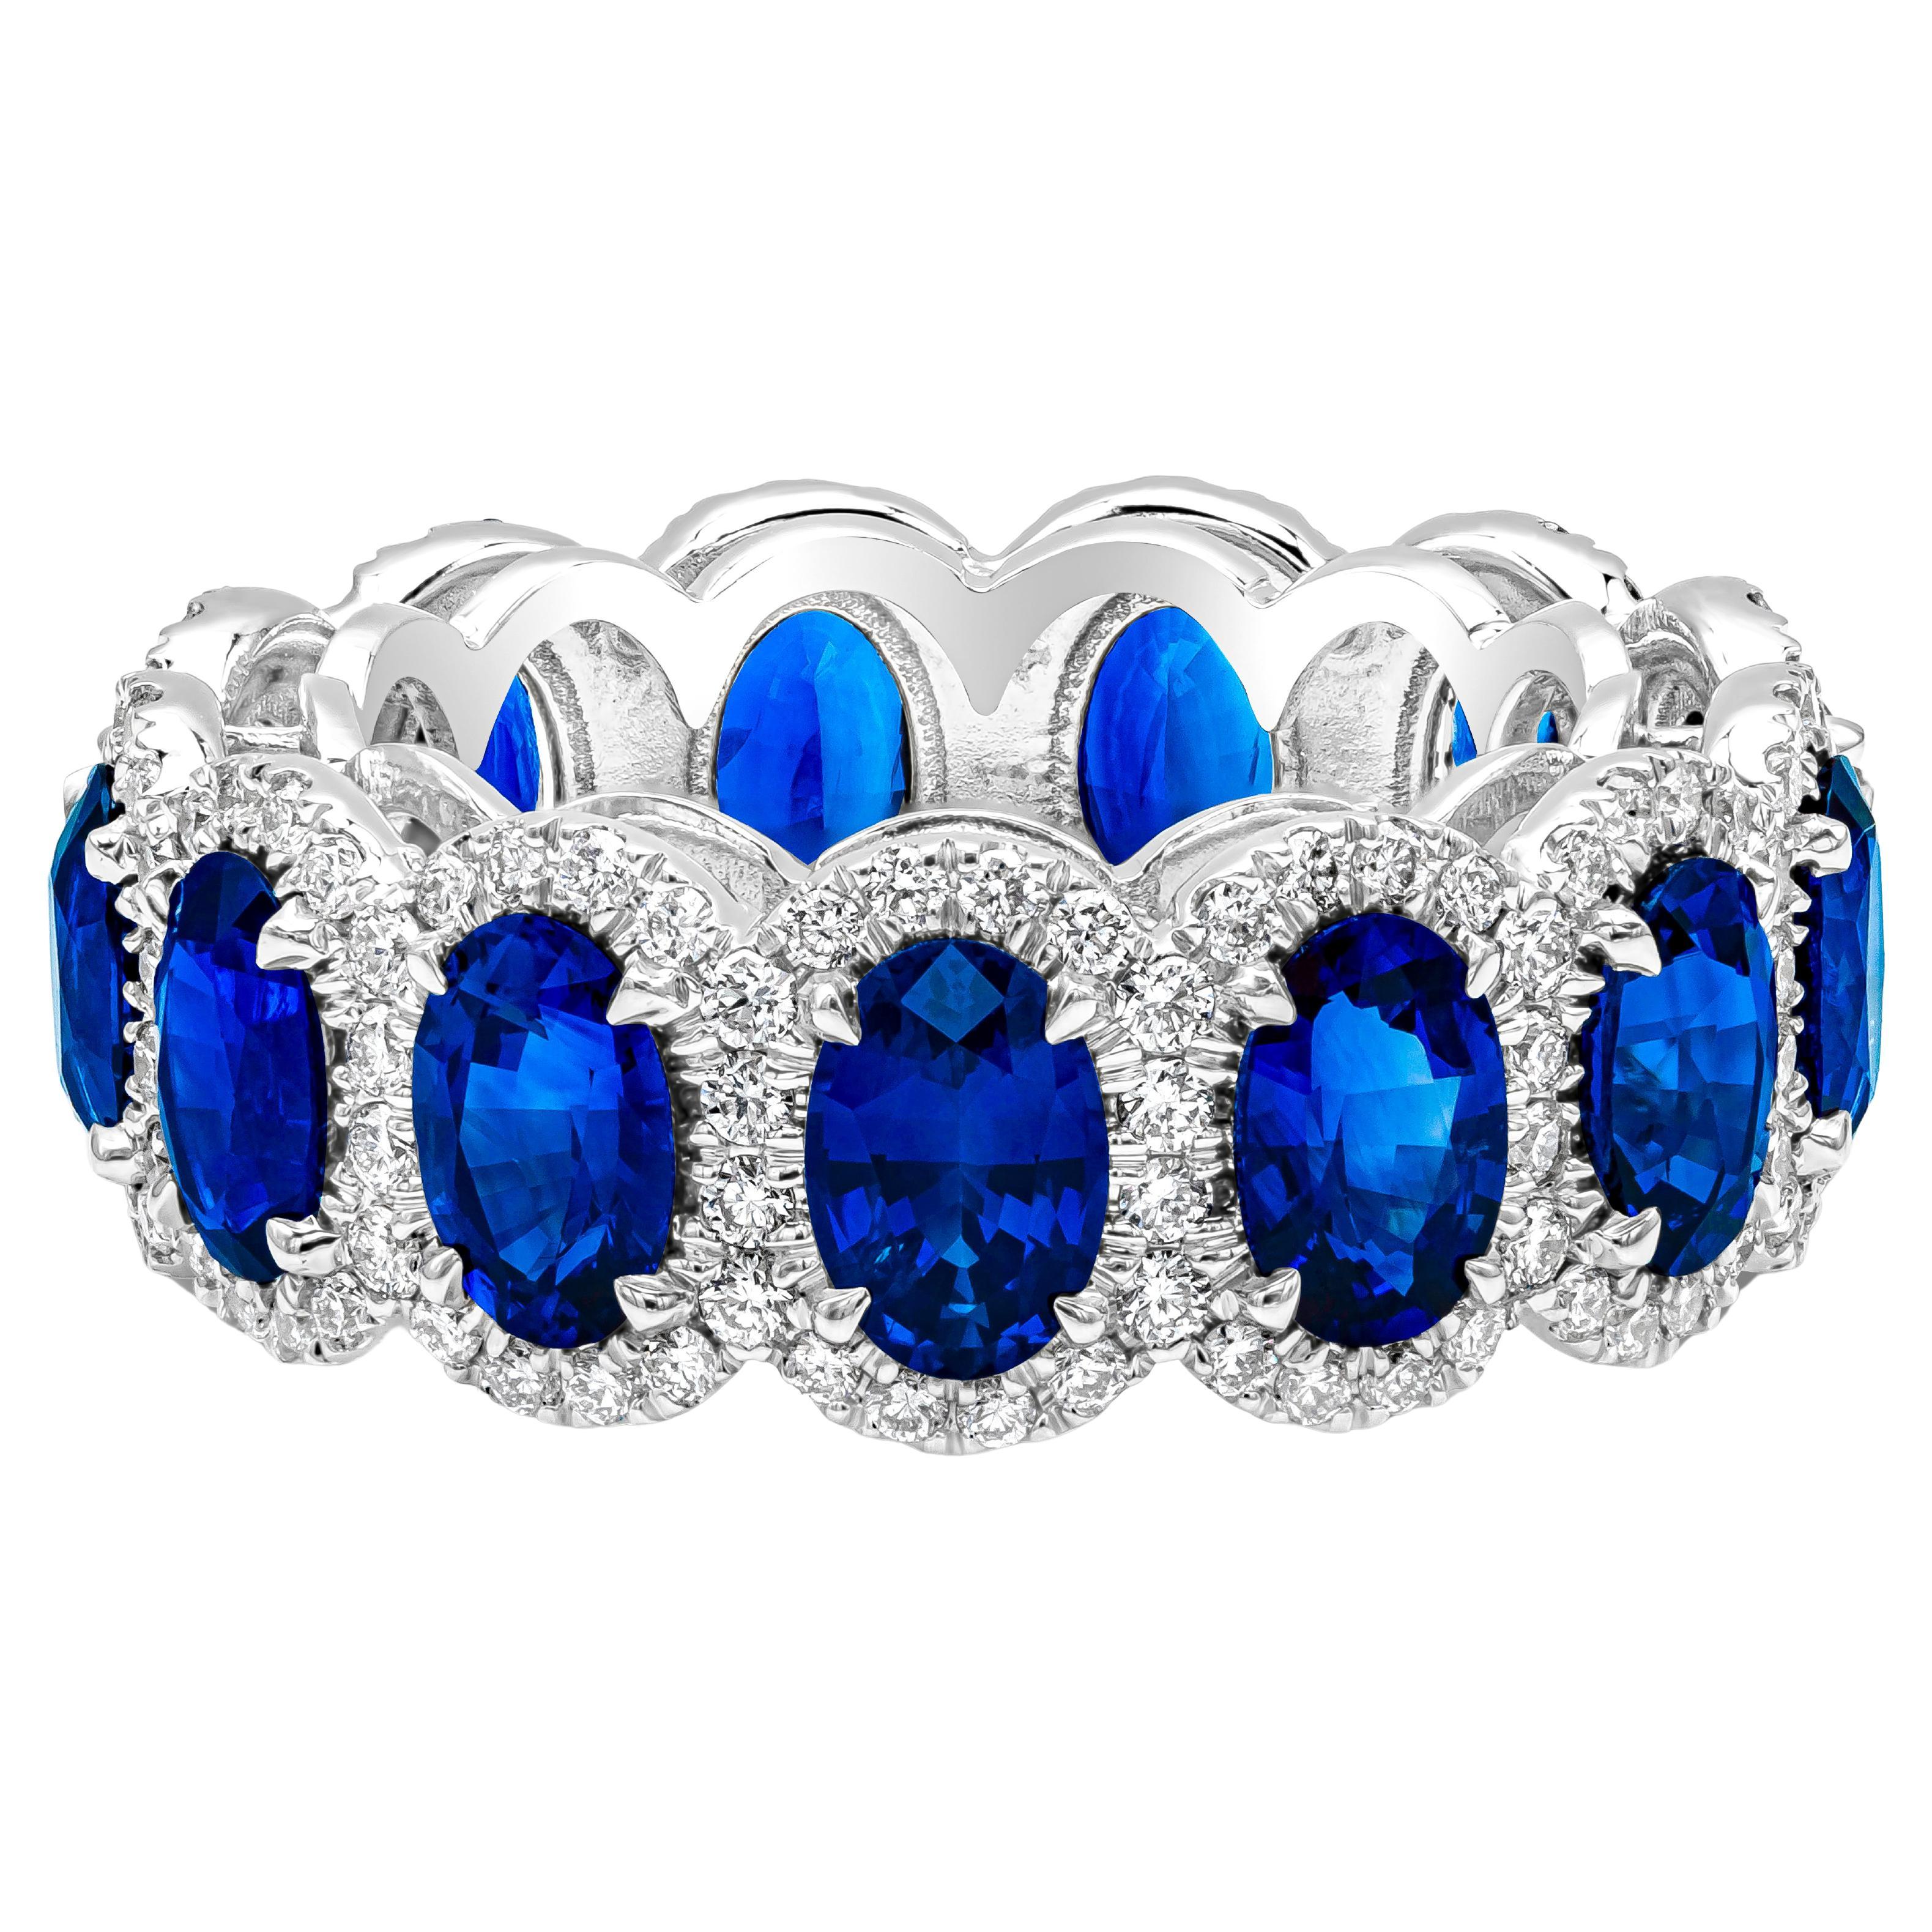 Roman Malakov 7.18 Carat Oval Cut Blue Sapphire Halo Eternity Wedding Band Ring For Sale